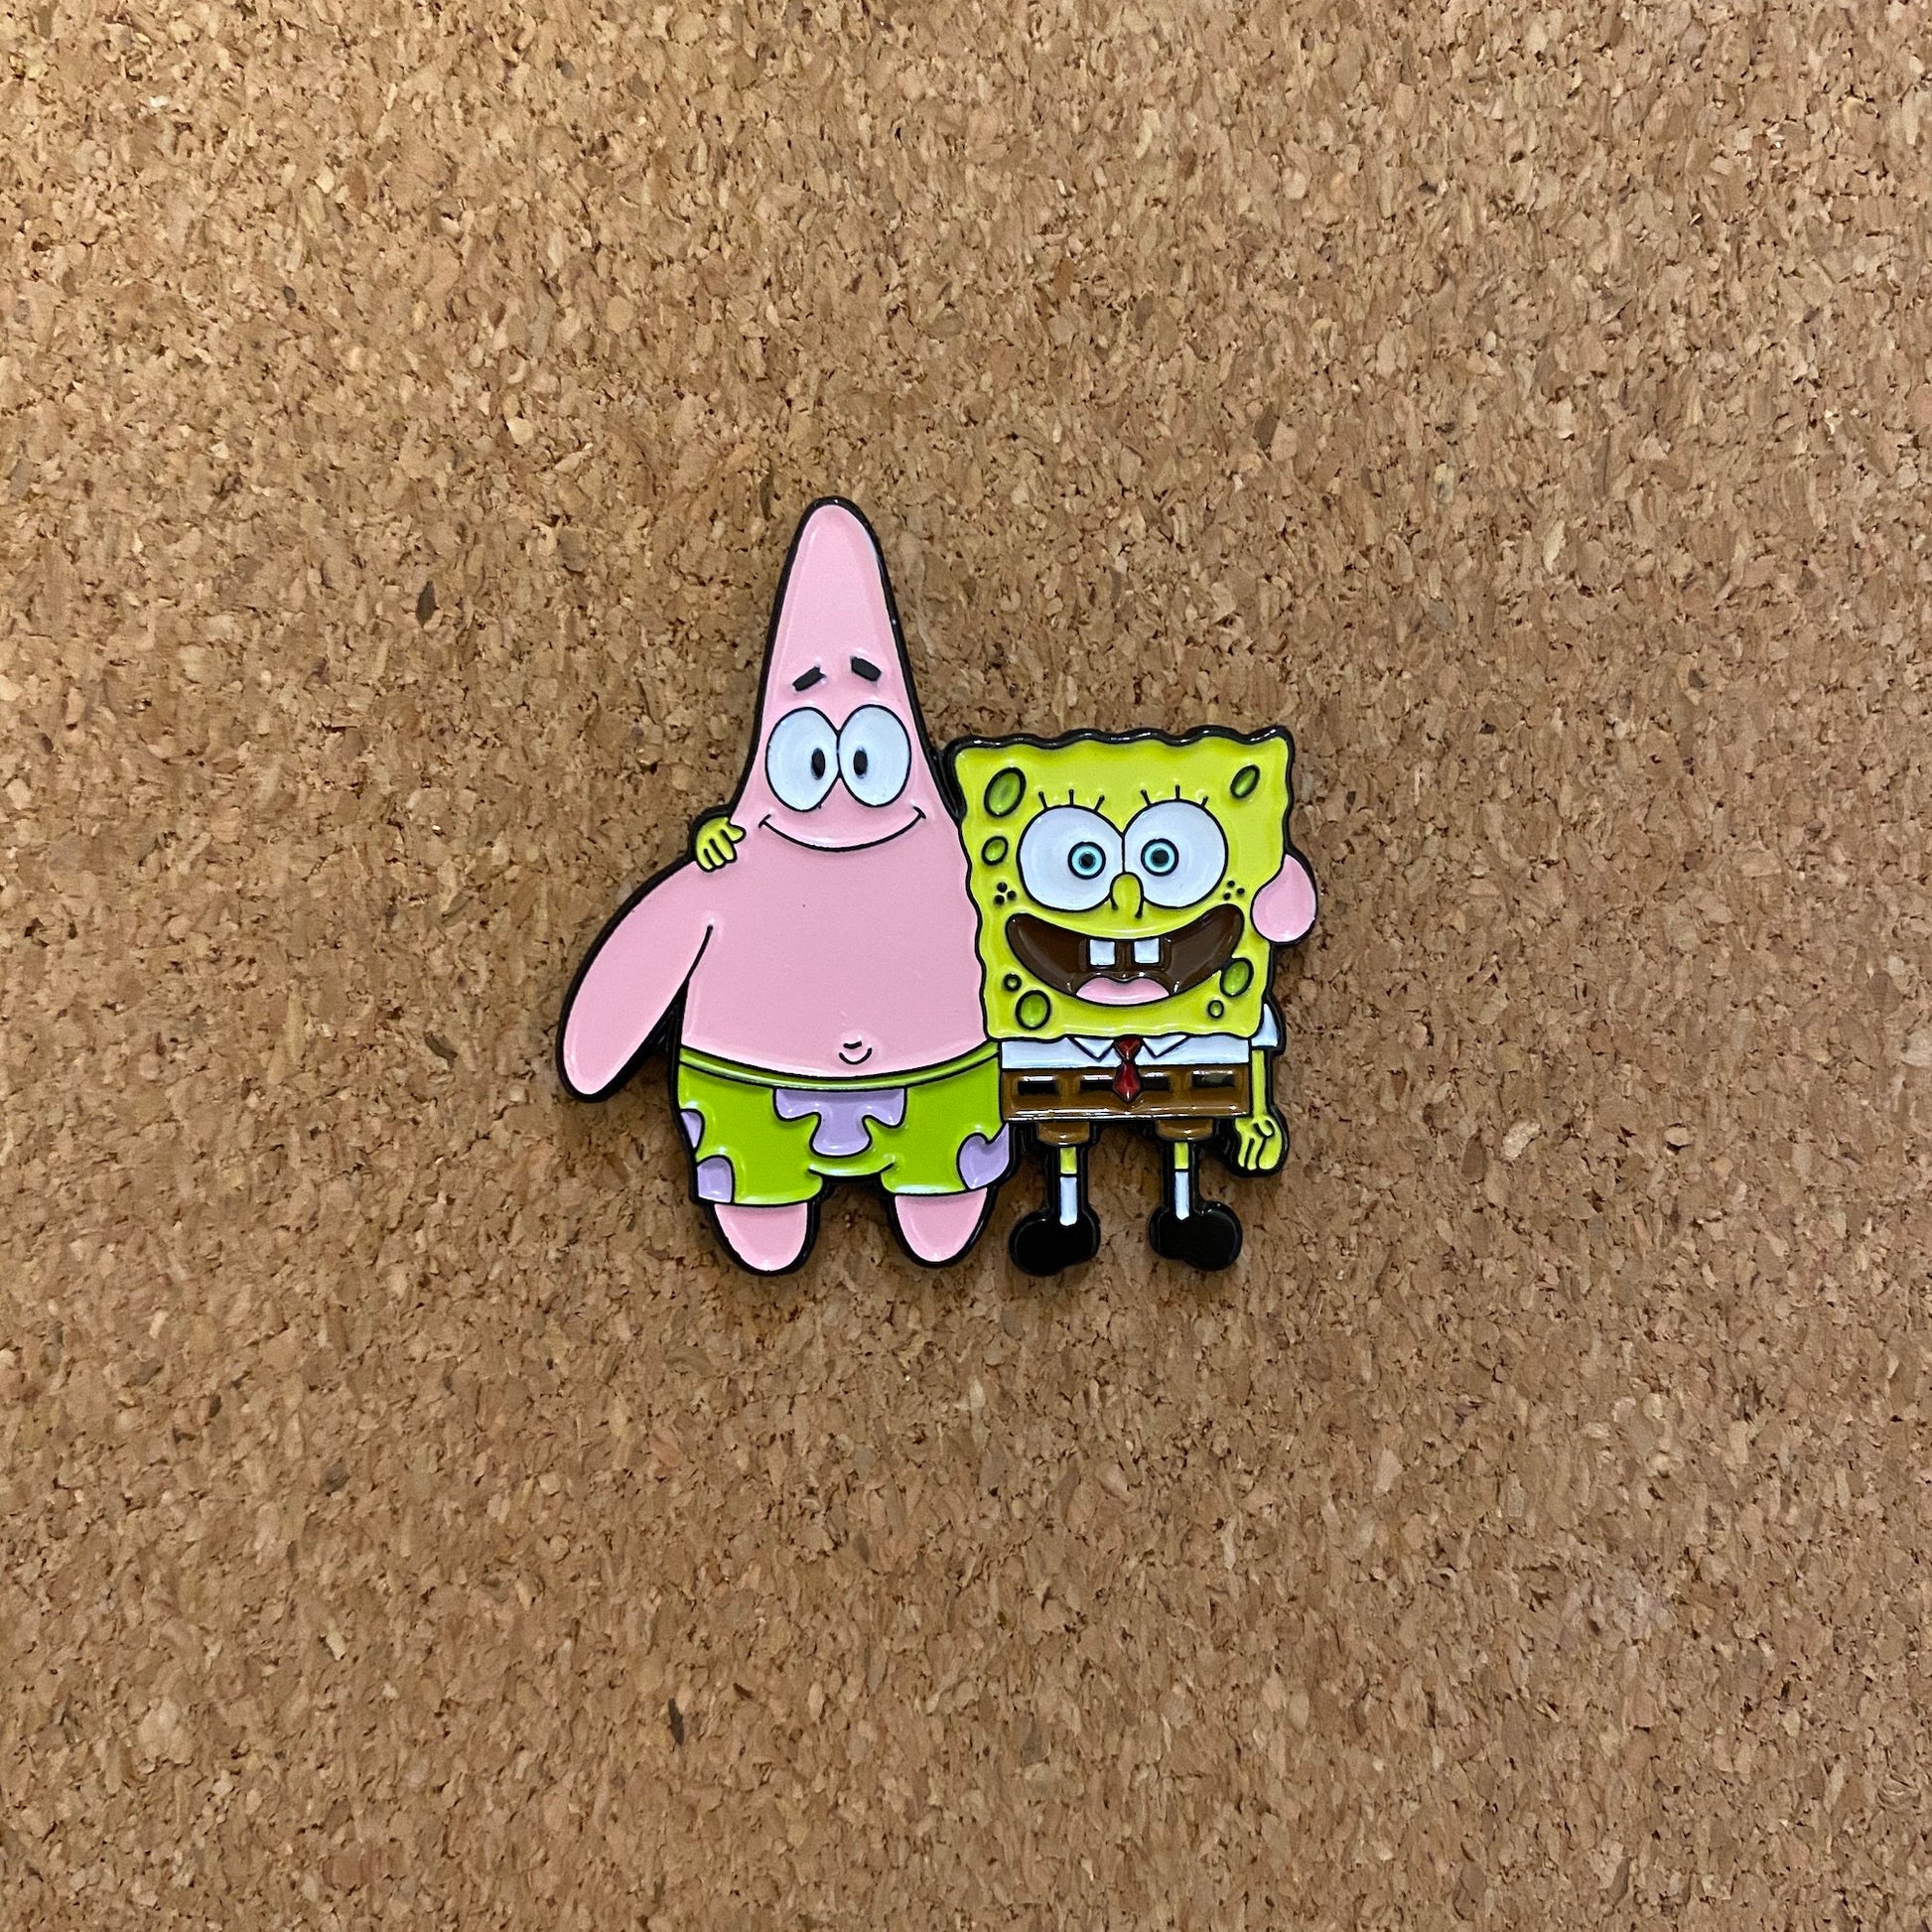 Spongebob Squarepants and Patrick Star Enamel Pin - thehappypin